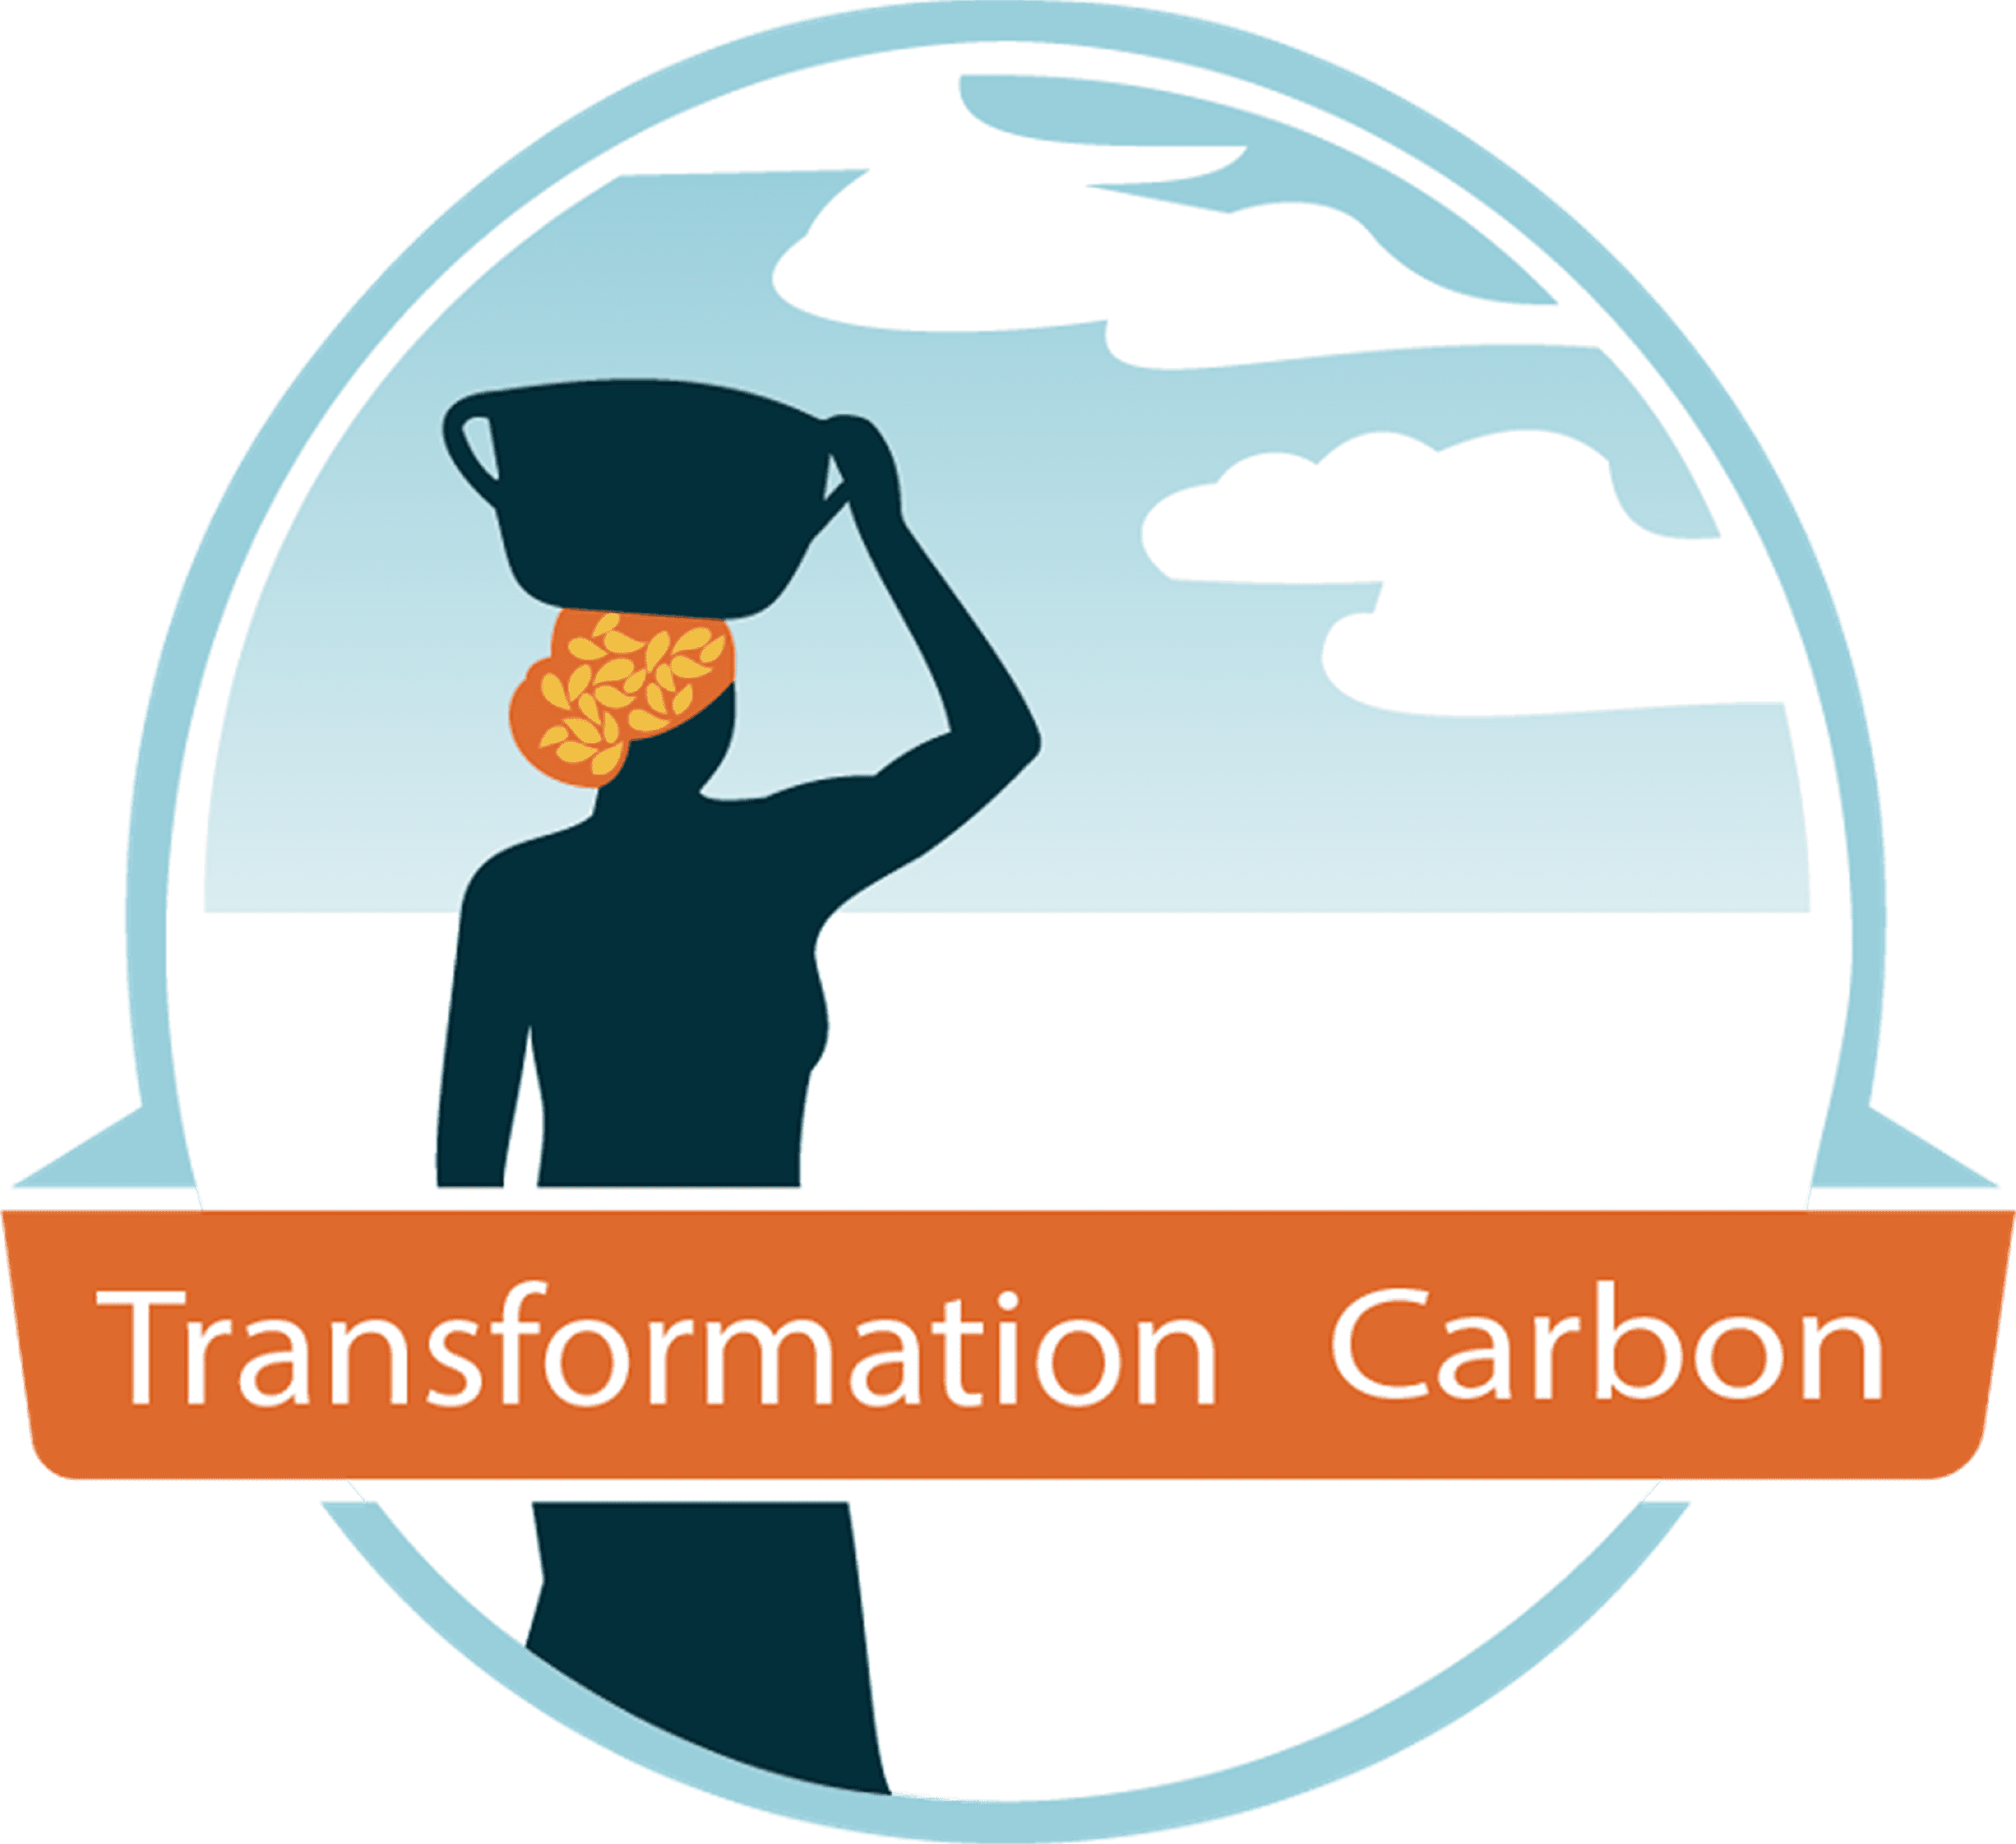 Transformation du carbone